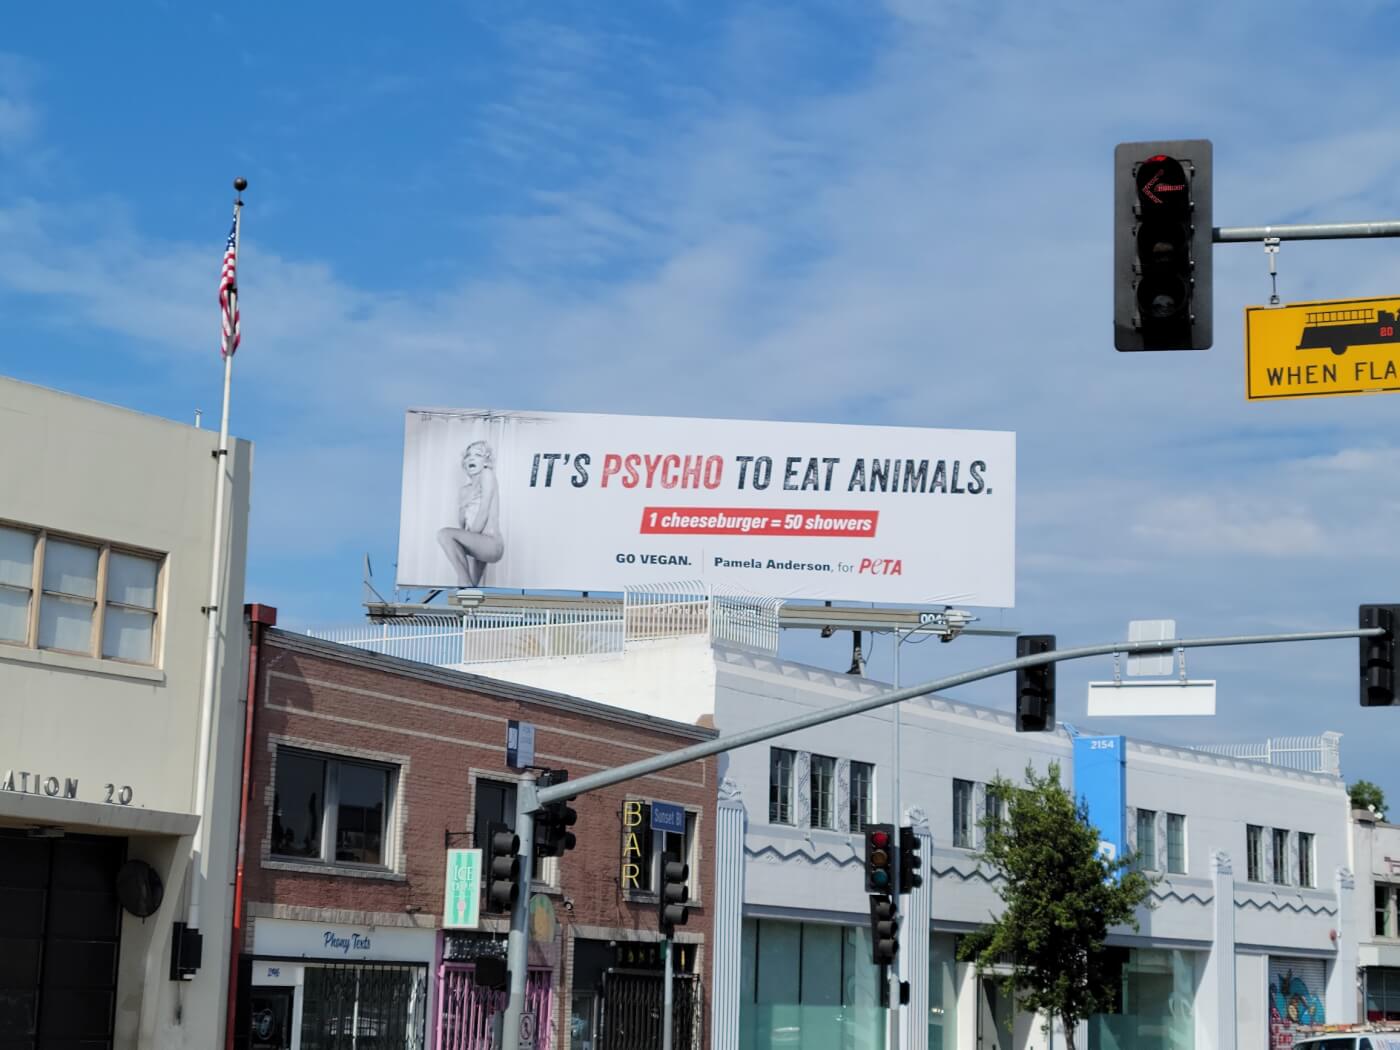 It's Psycho to Eat Animals billboard in Los Angeles